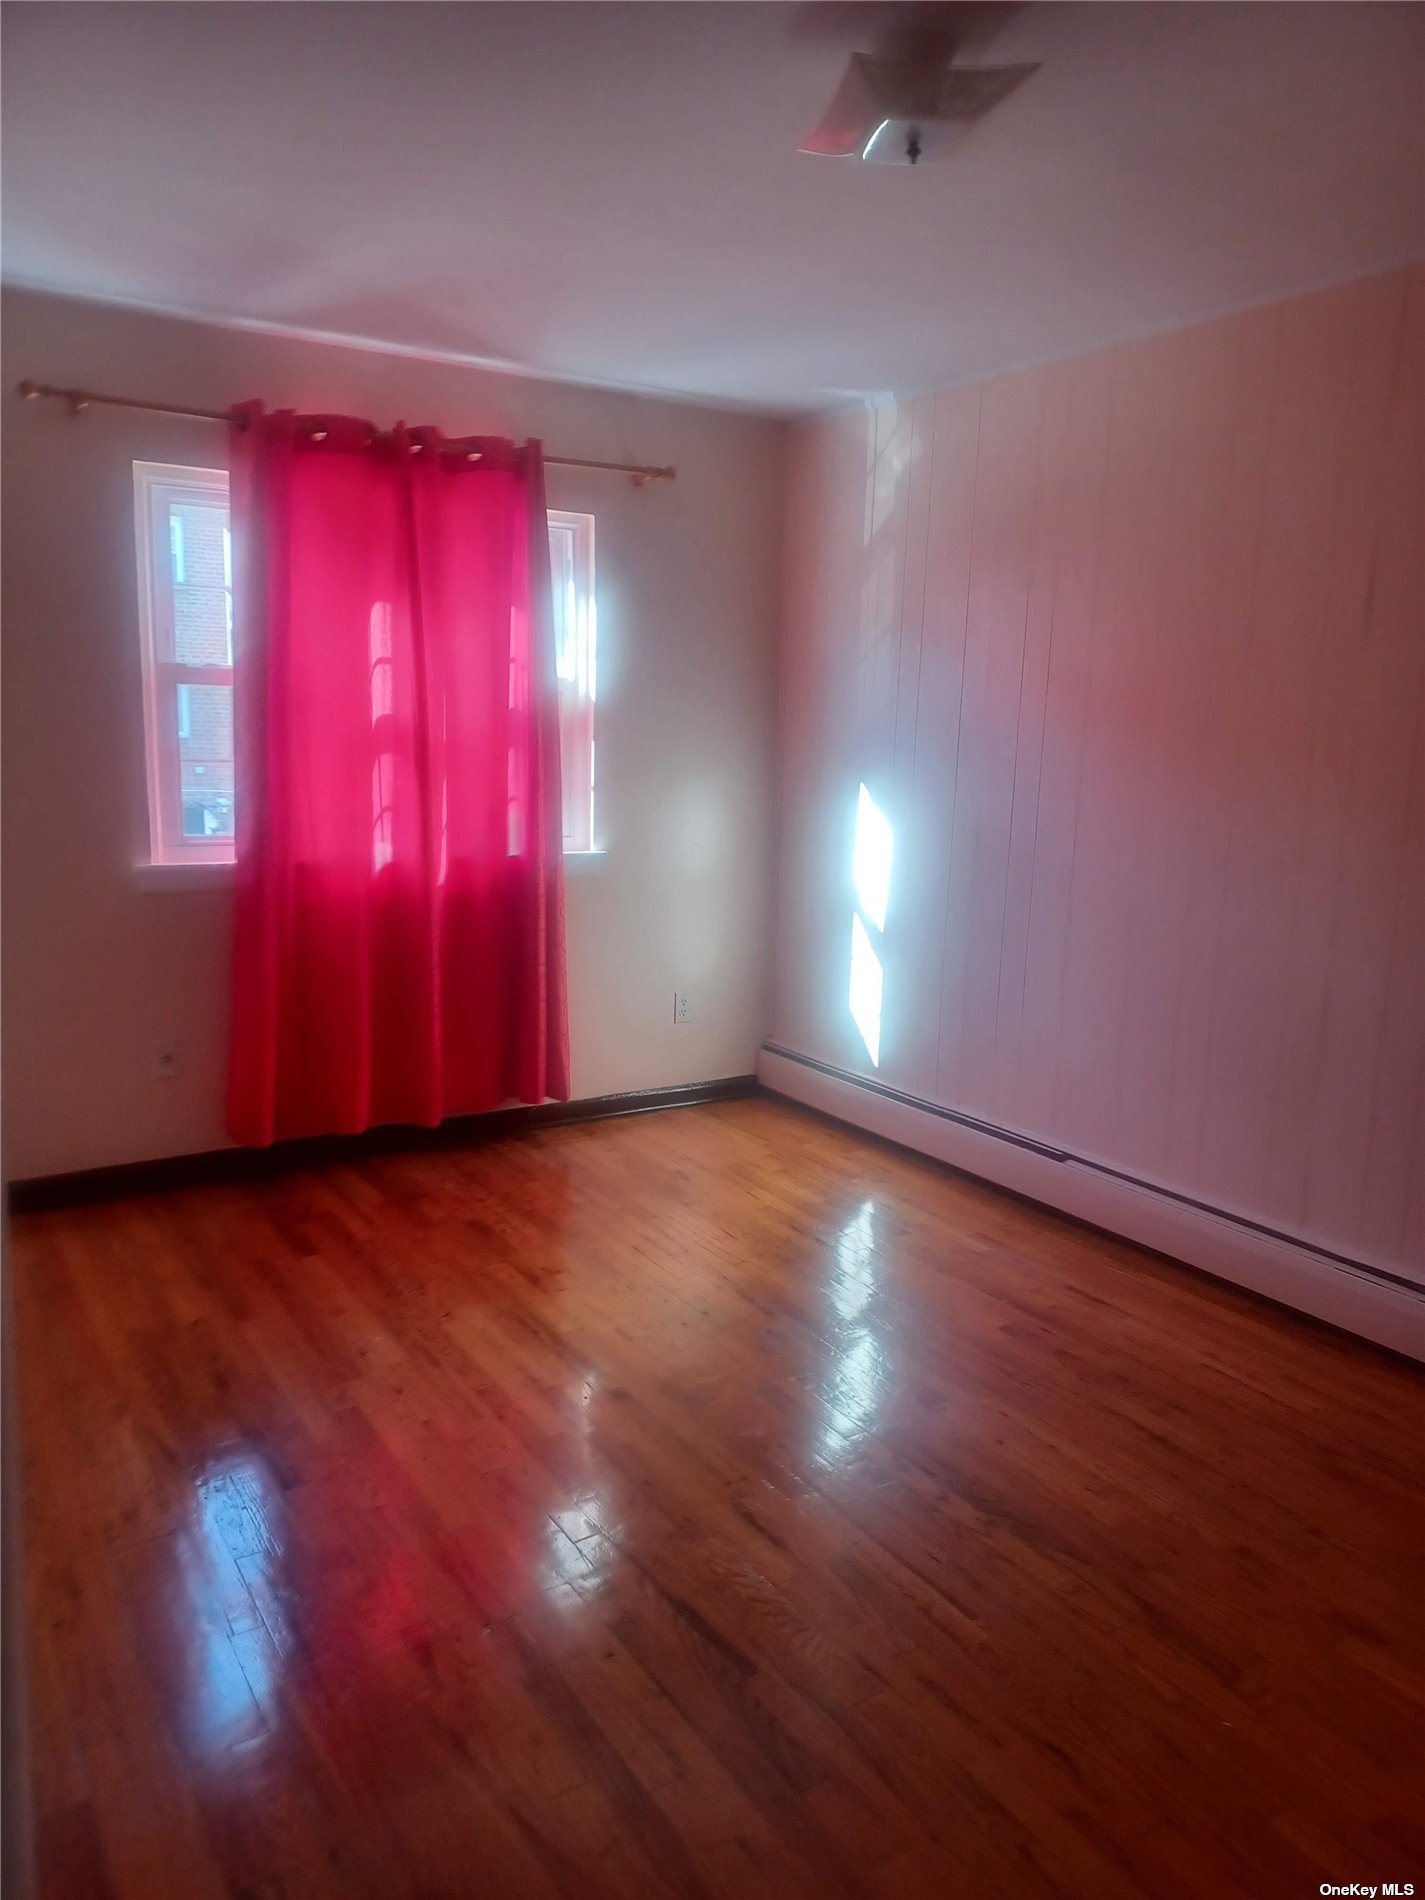 Apartment in Canarsie - 82nd  Brooklyn, NY 11236